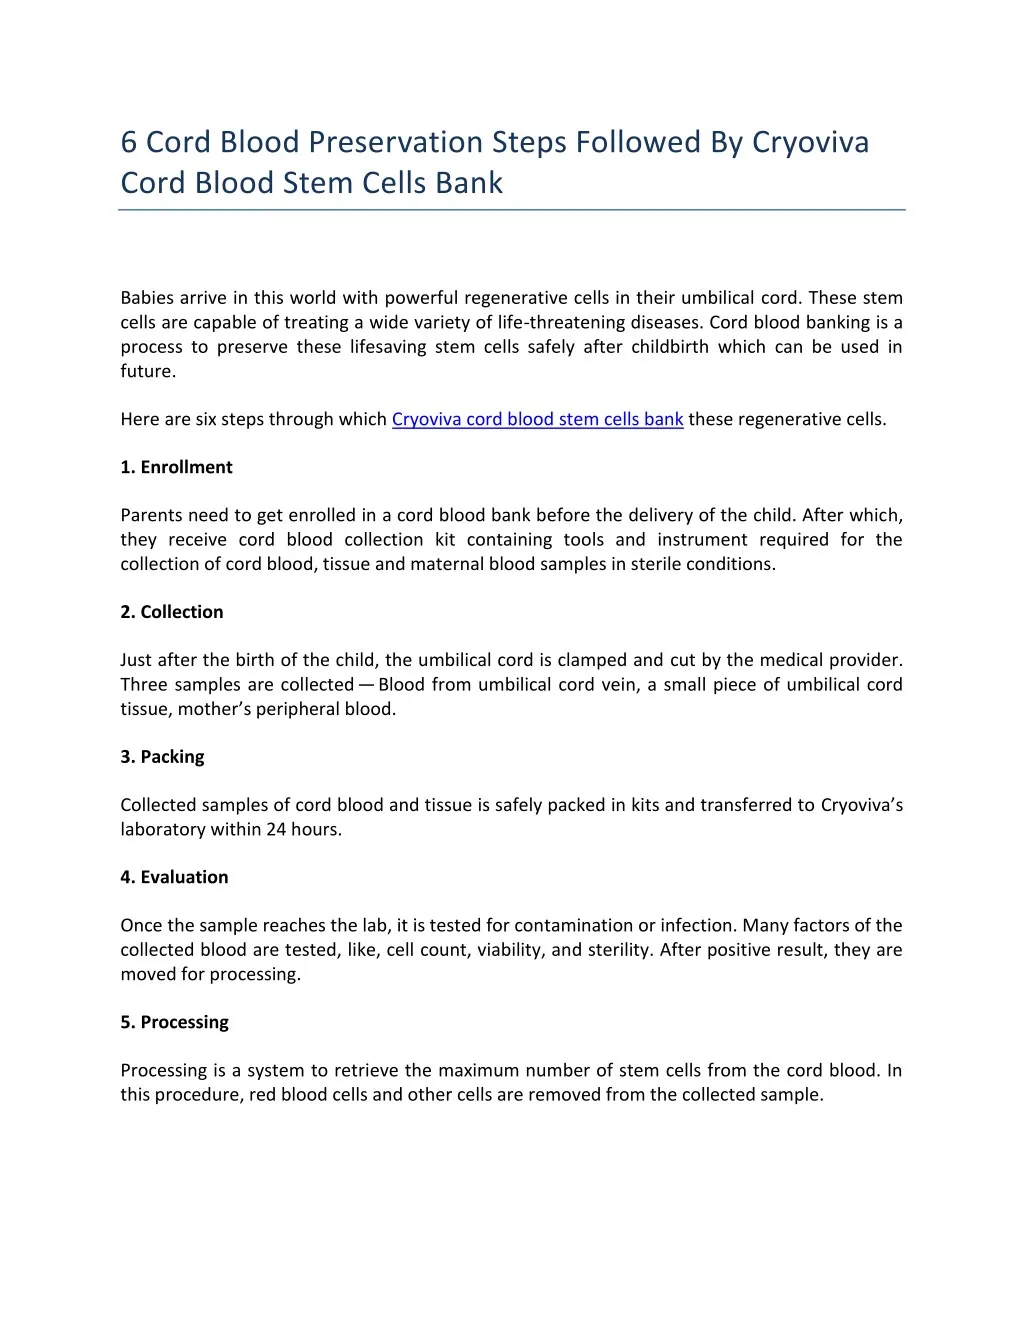 6 cord blood preservation steps followed